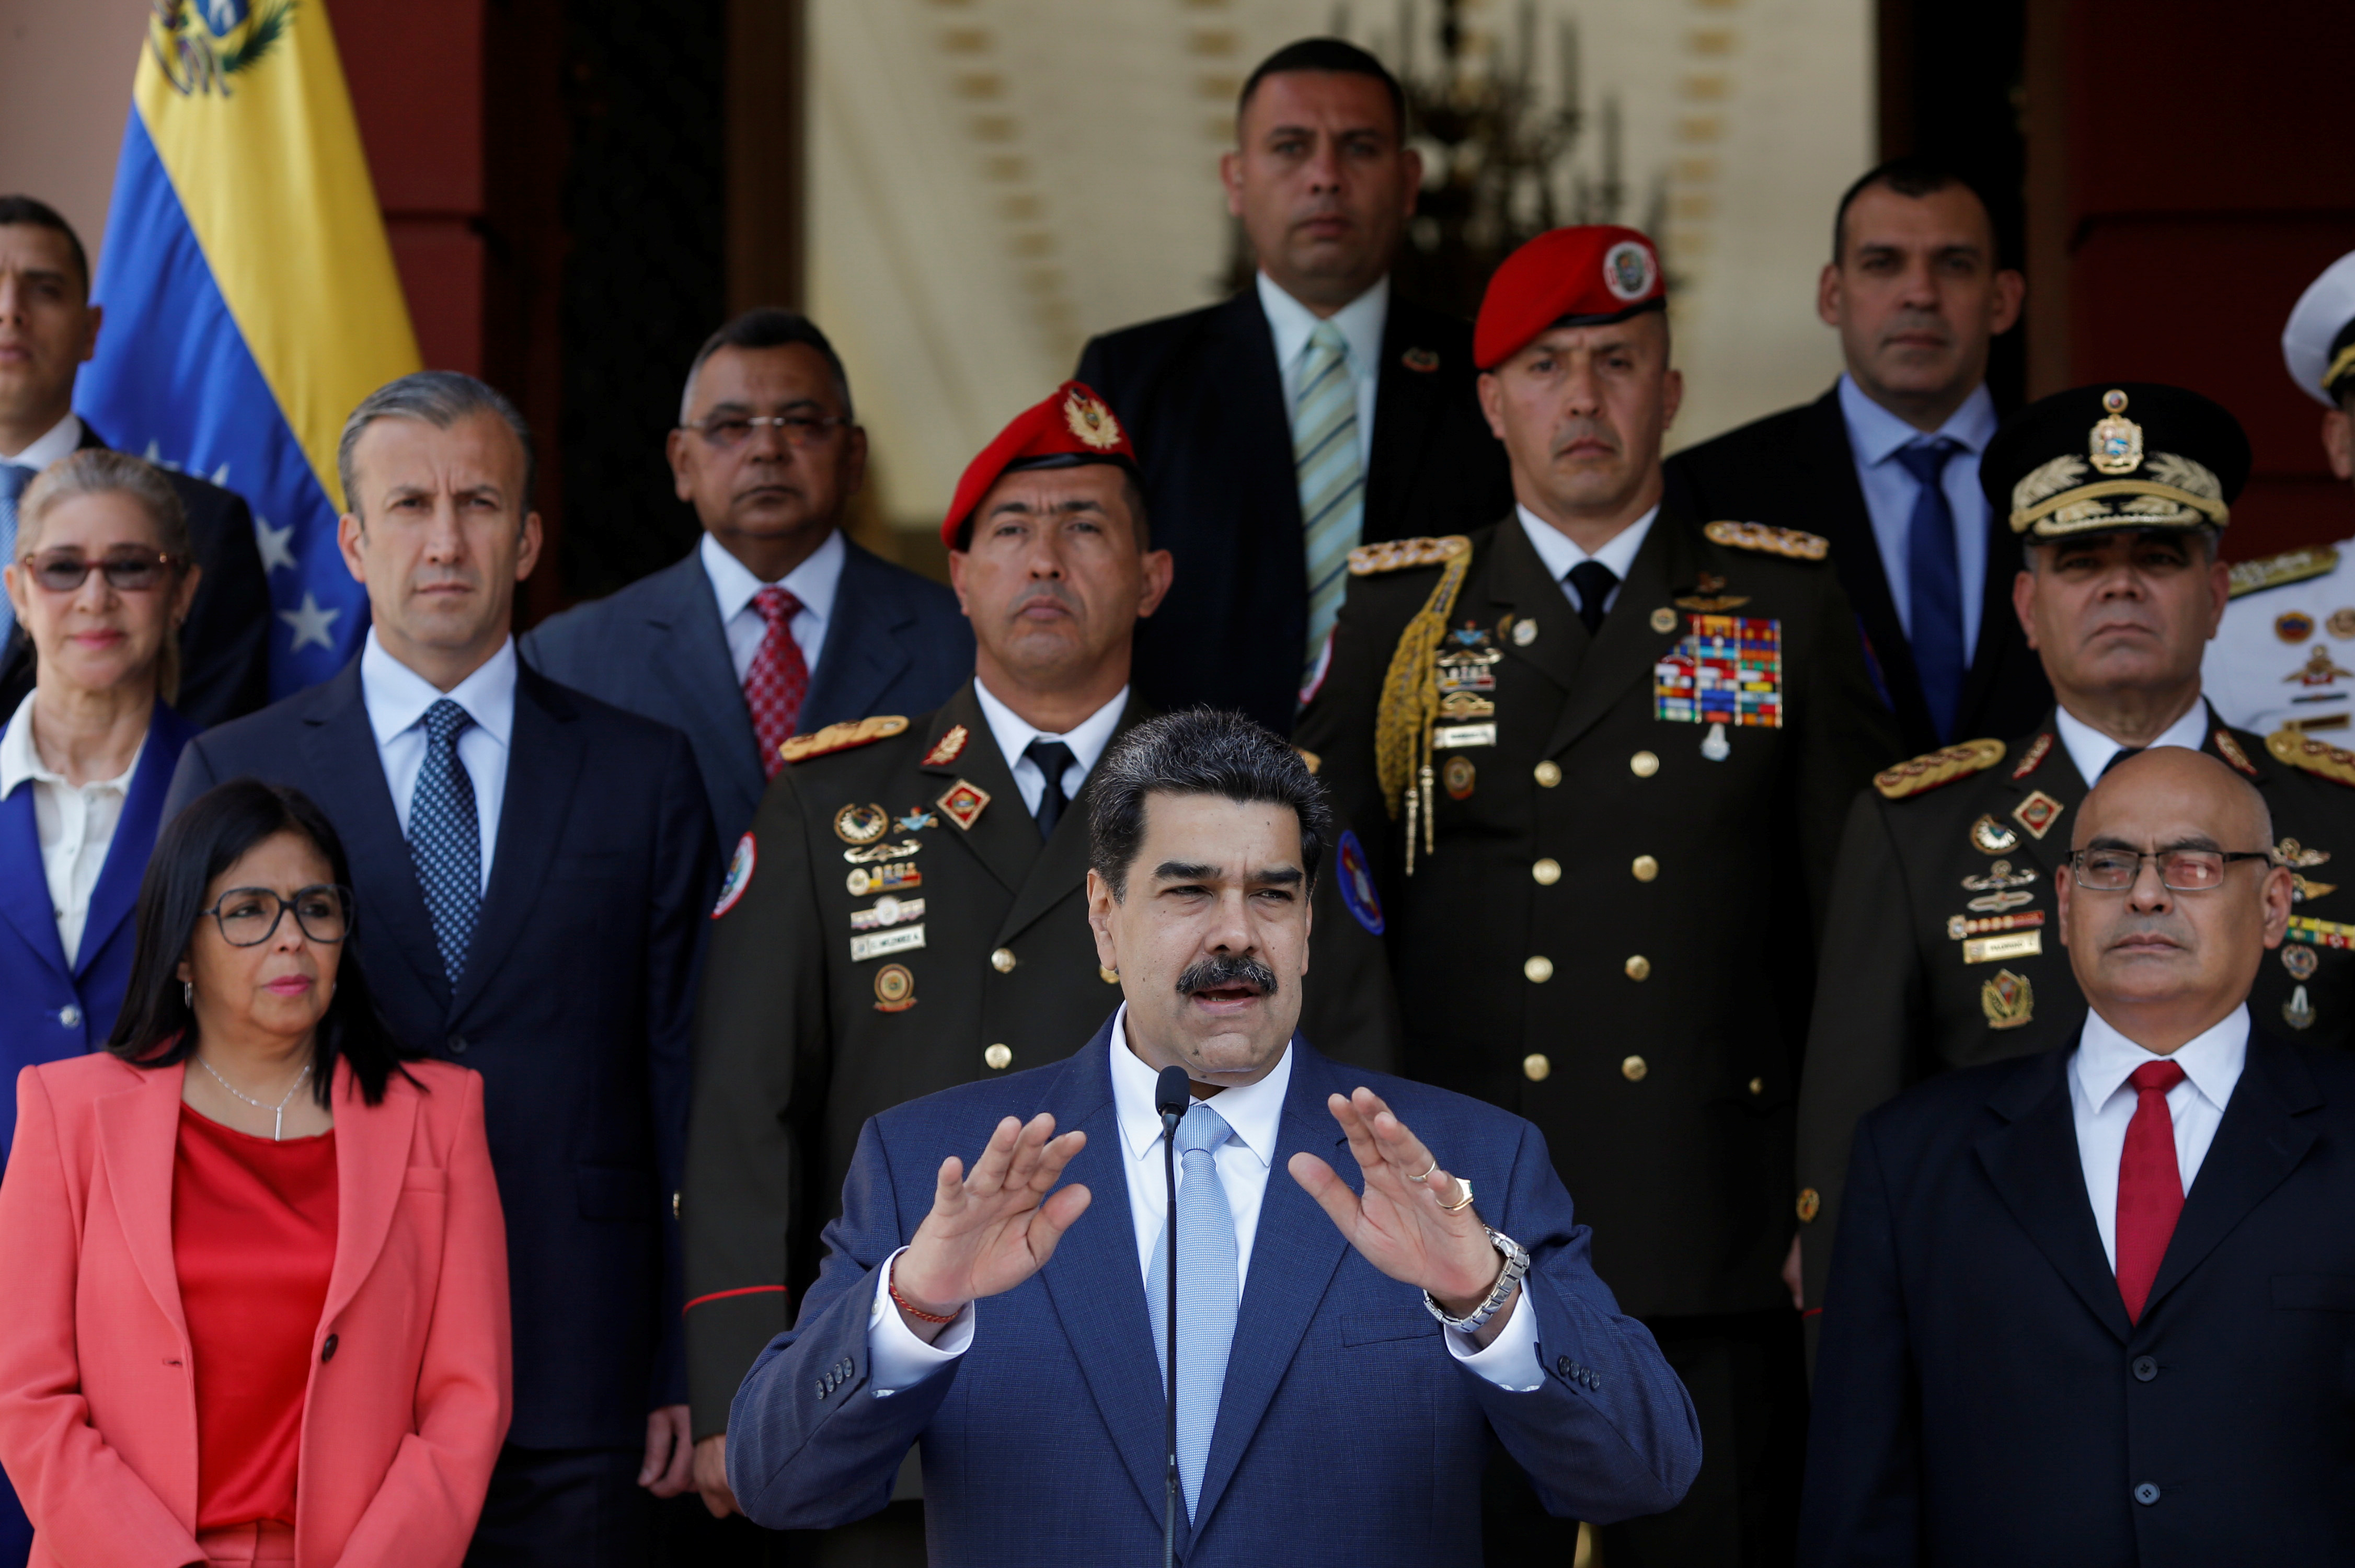 Vente Venezuela se pronunció sobre imputaciones de la justicia de EEUU contra el “narcoterrorismo” del régimen de Maduro